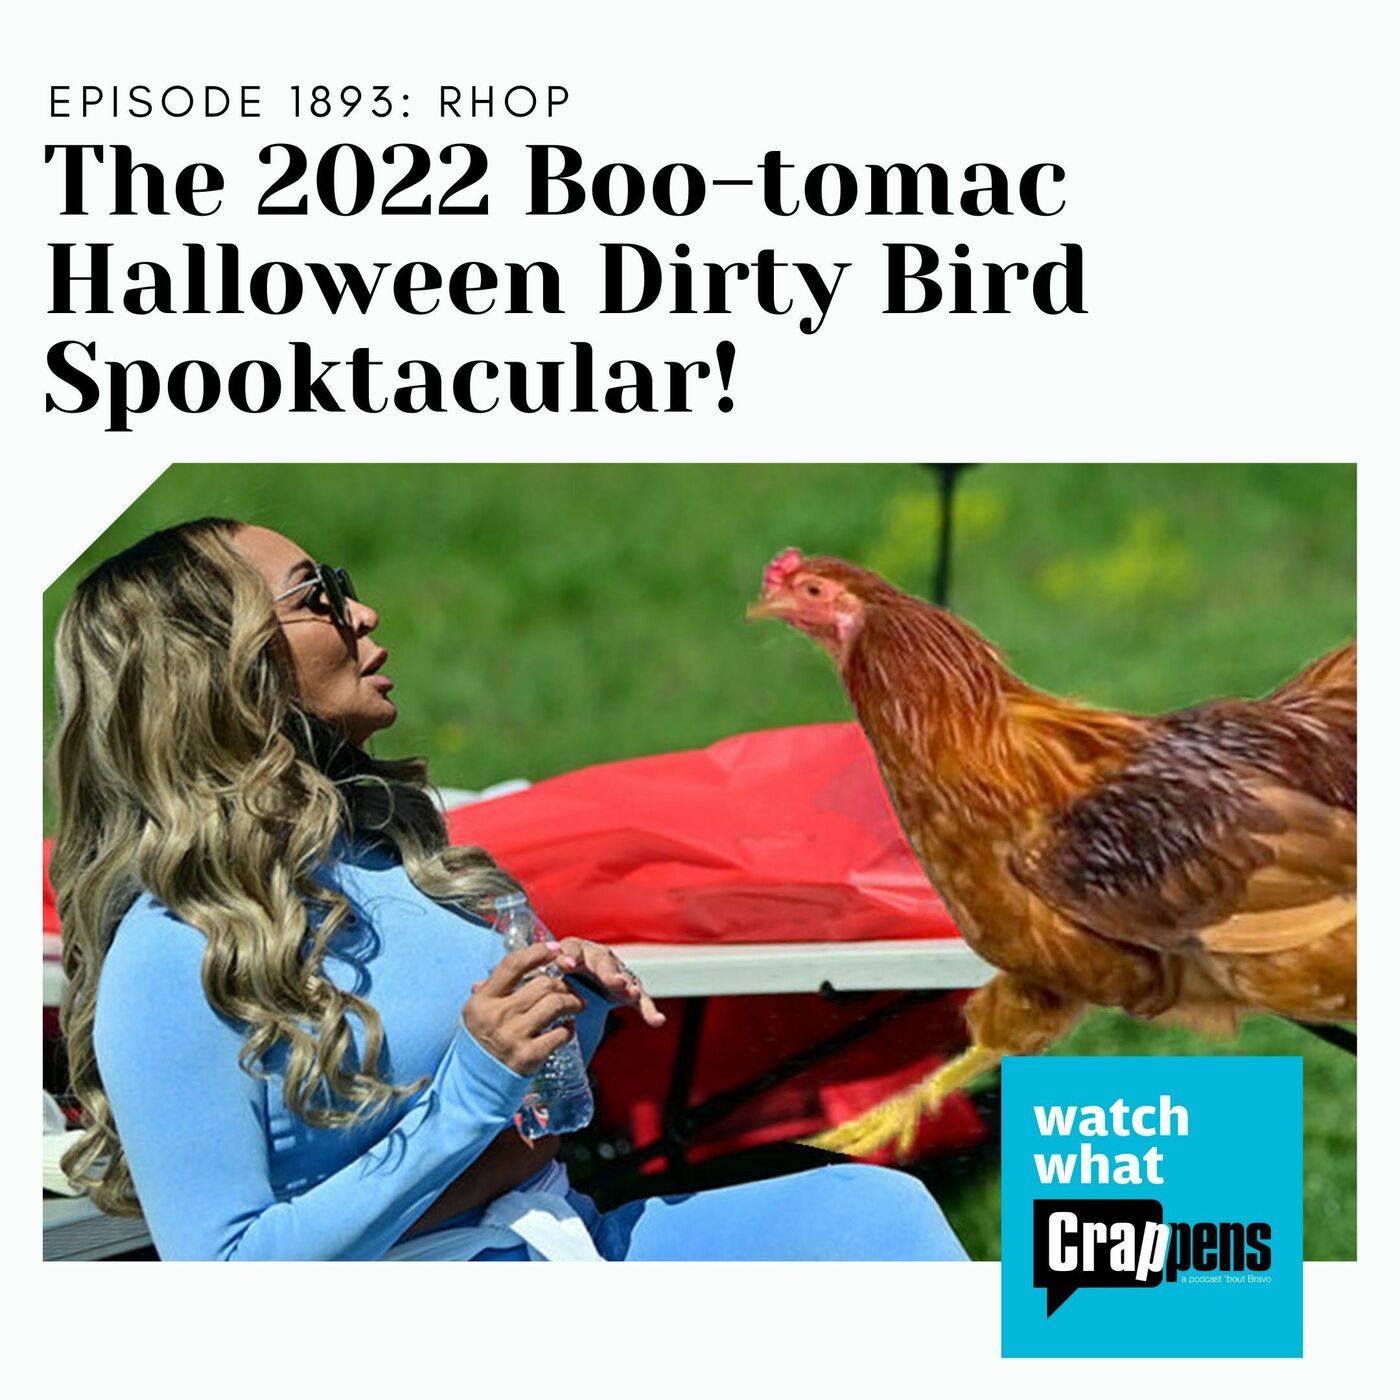 RHOP: The 2022 Boo-tomac Halloween Dirty Bird Spooktacular!